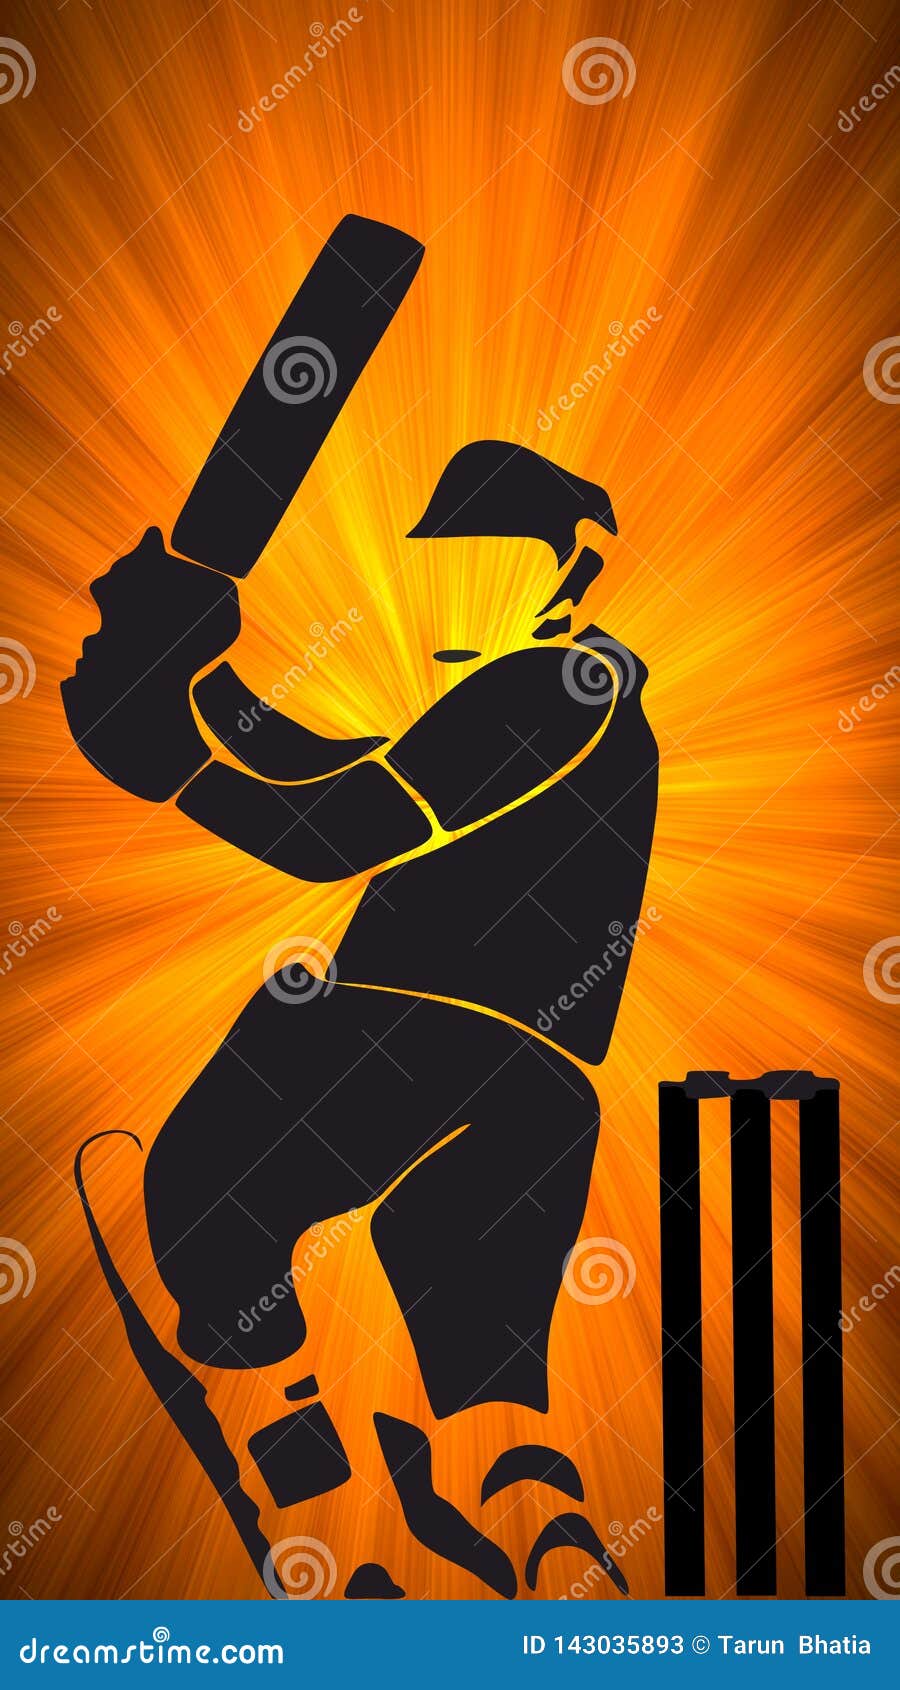 200+] Indian Cricket Wallpapers | Wallpapers.com